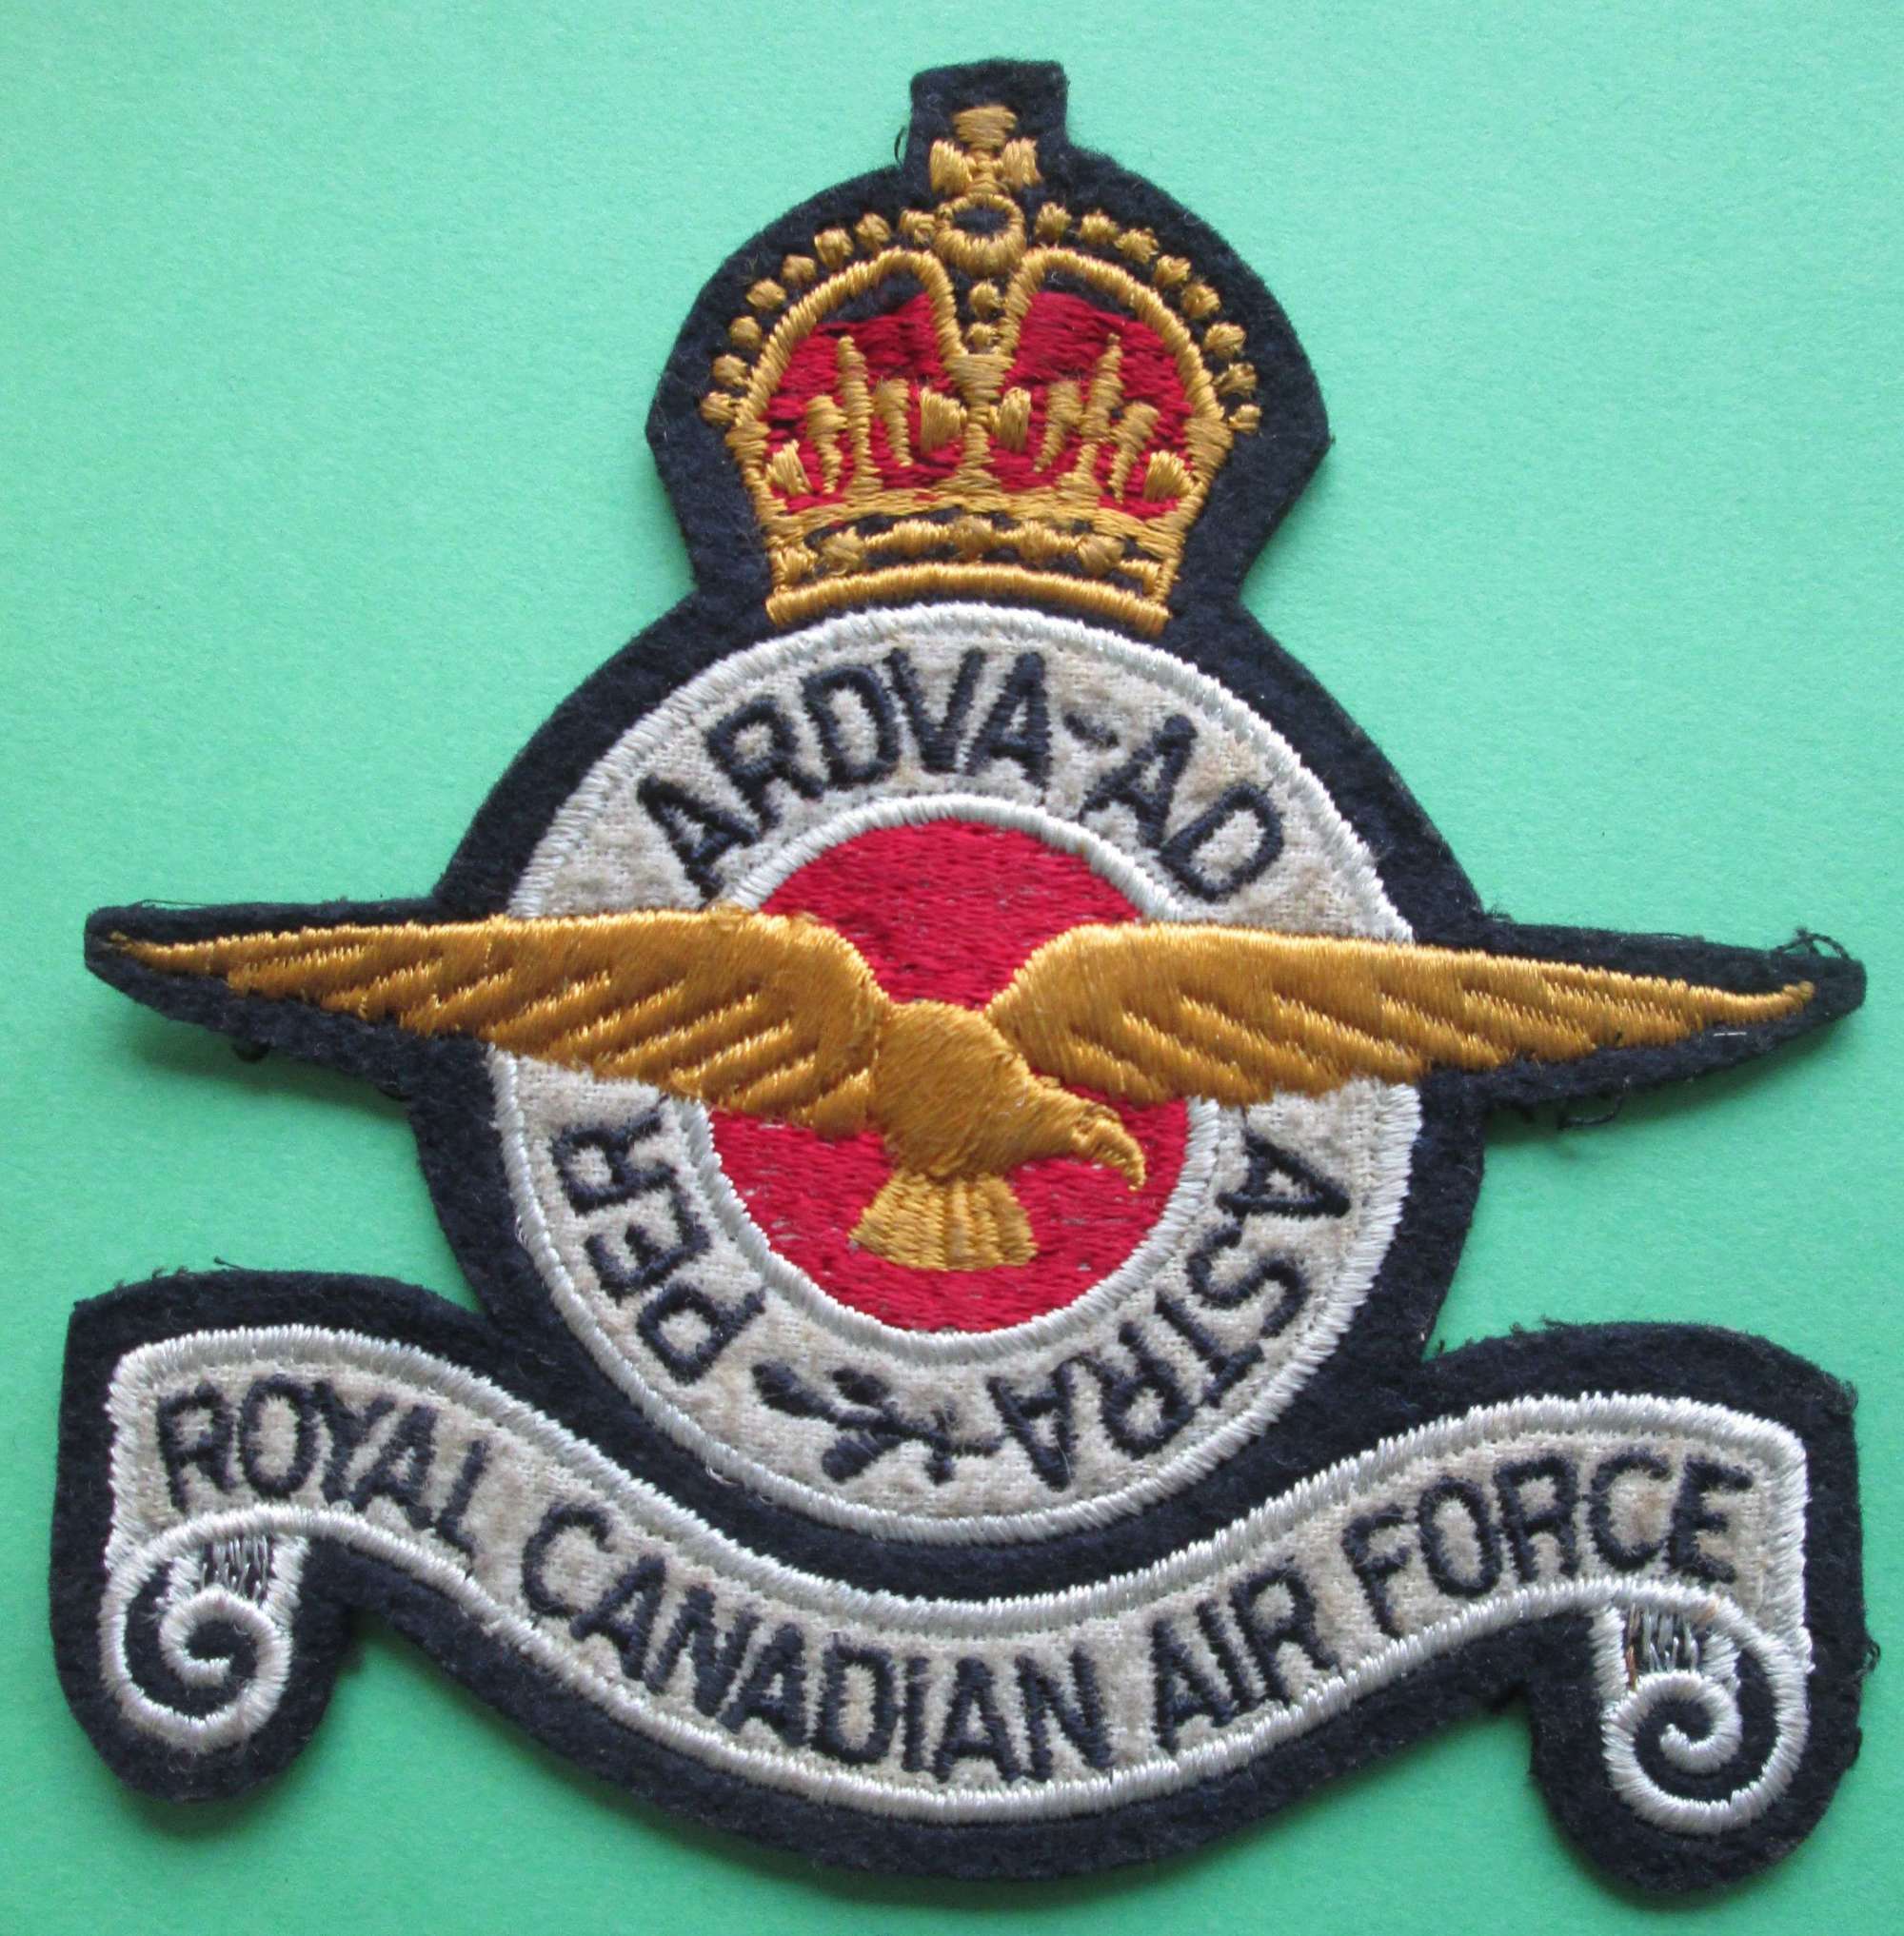 ROYAL CANADIAN AIR FORCE BADGE